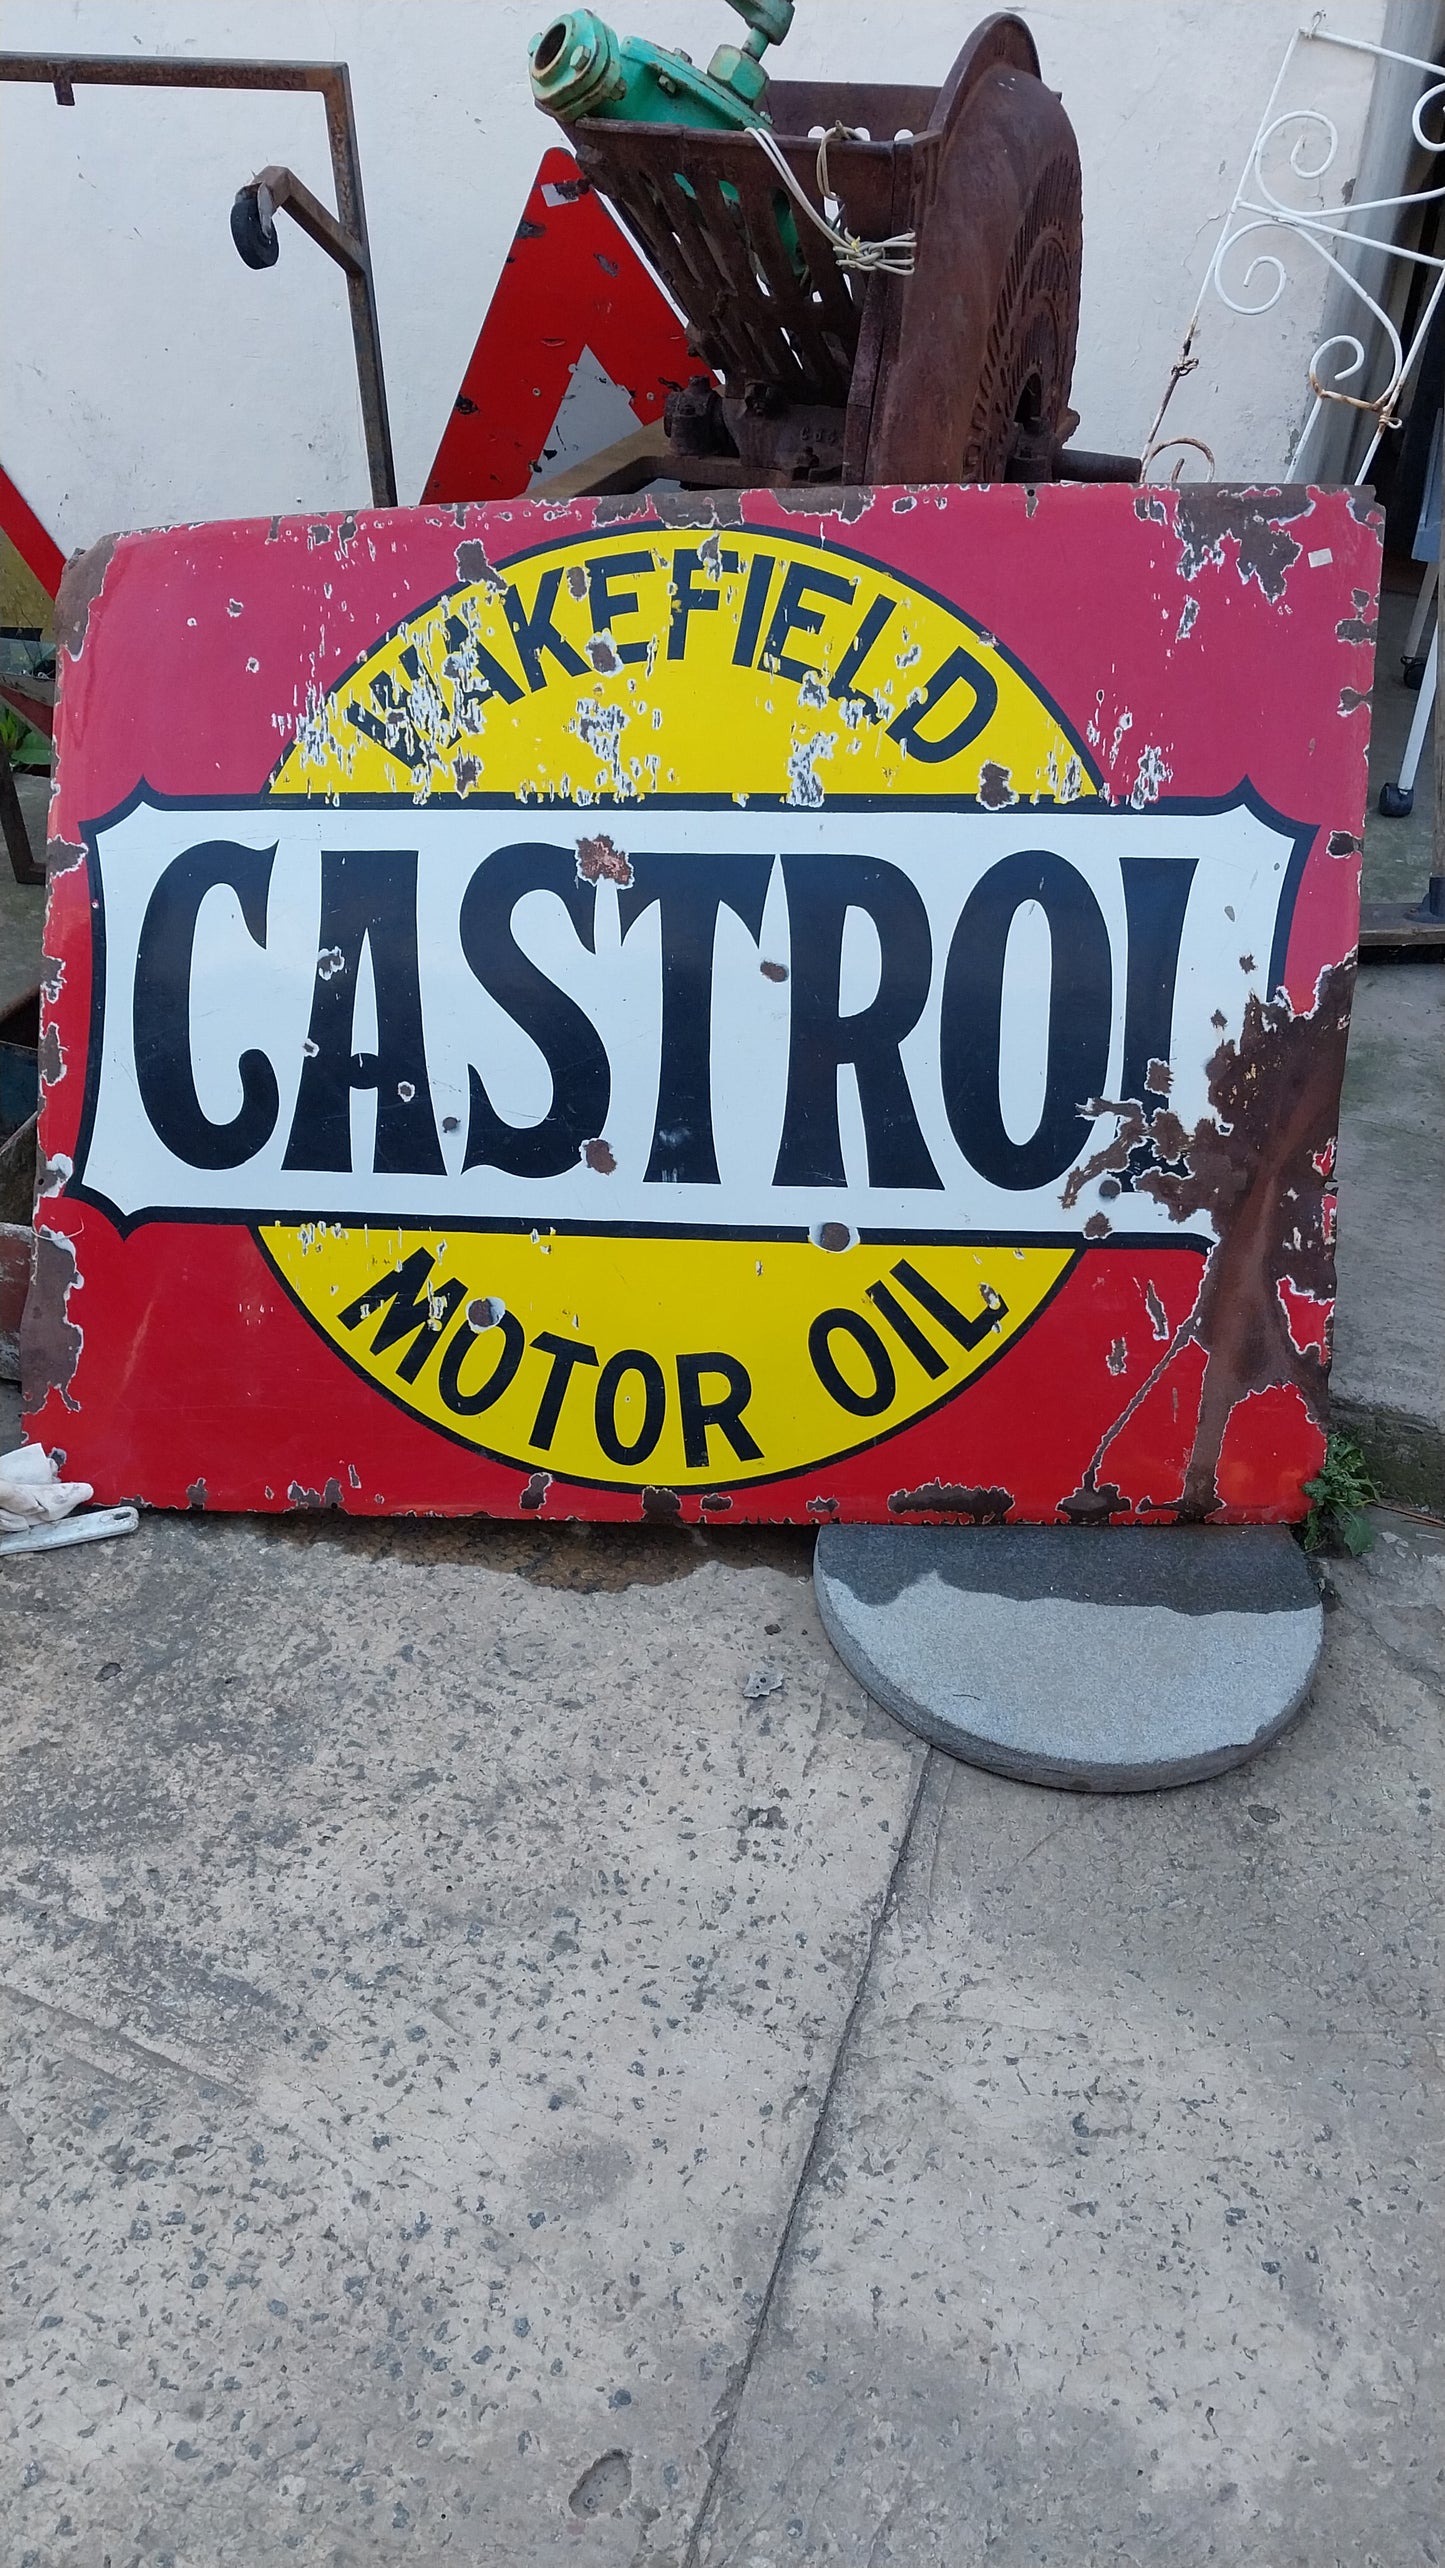 Castrol Wakefield motor oil sign